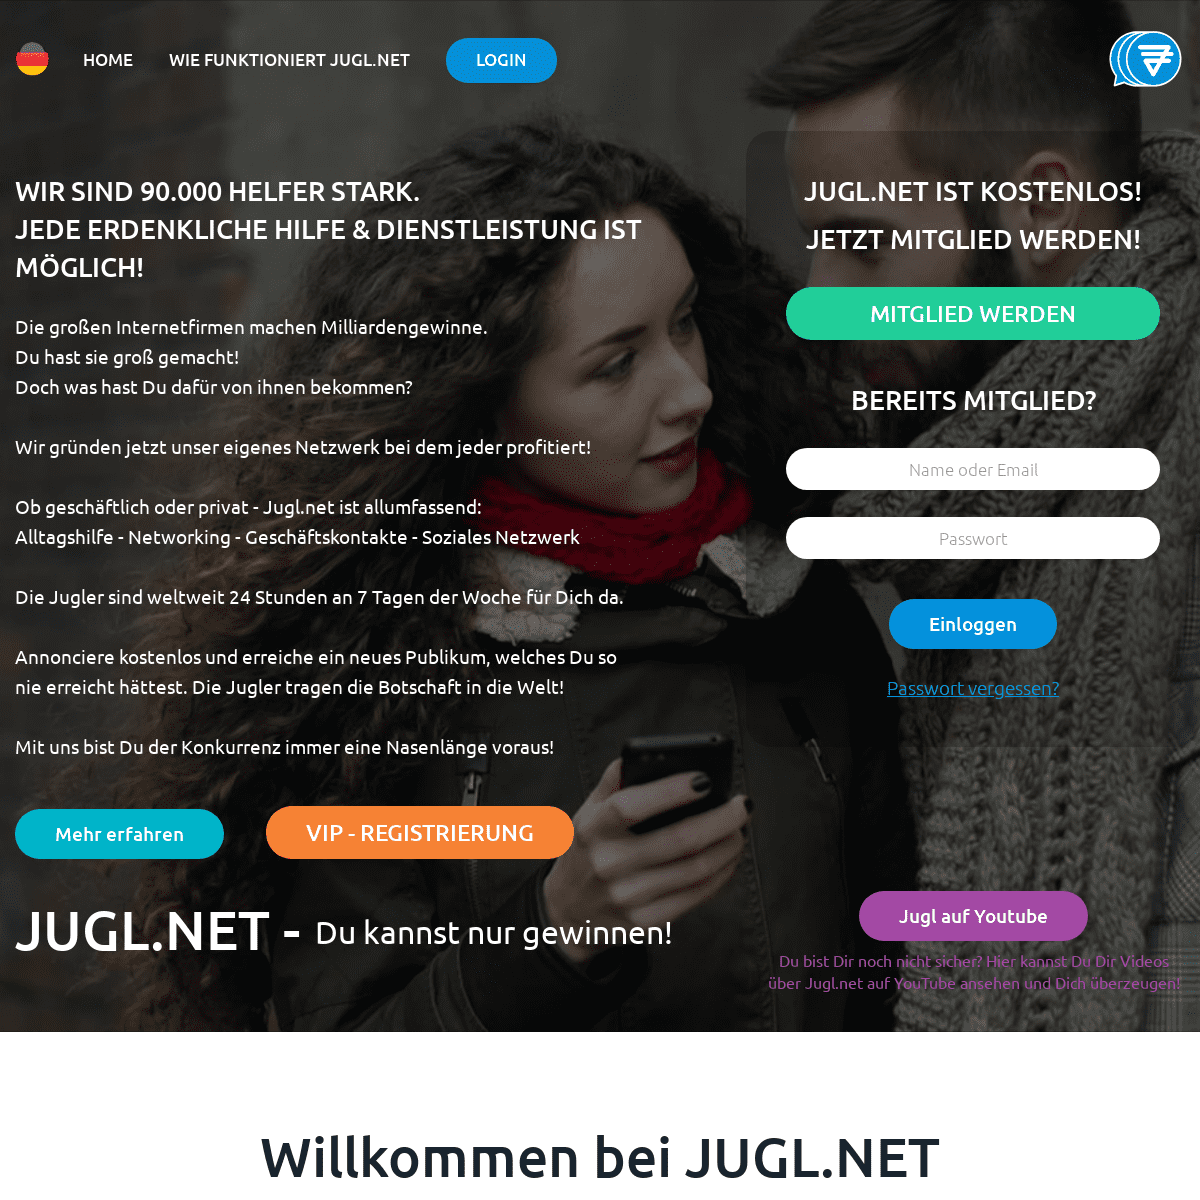 A complete backup of jugl.net